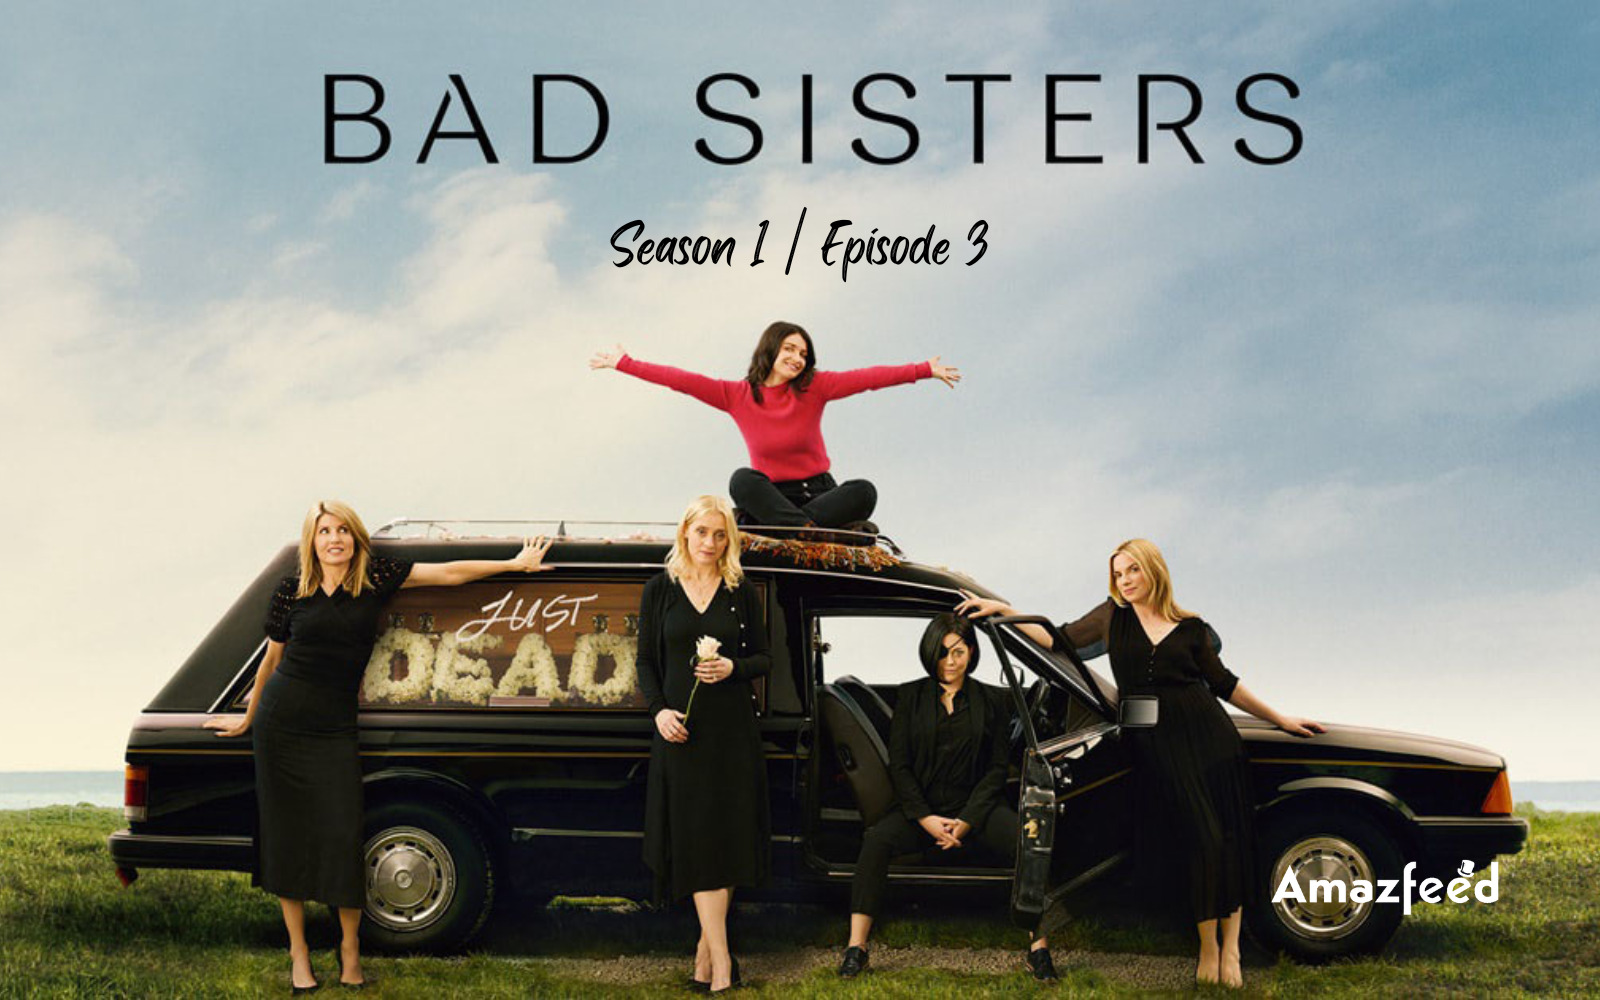 Bad Sisters Season 1 Episode 3 Release Date